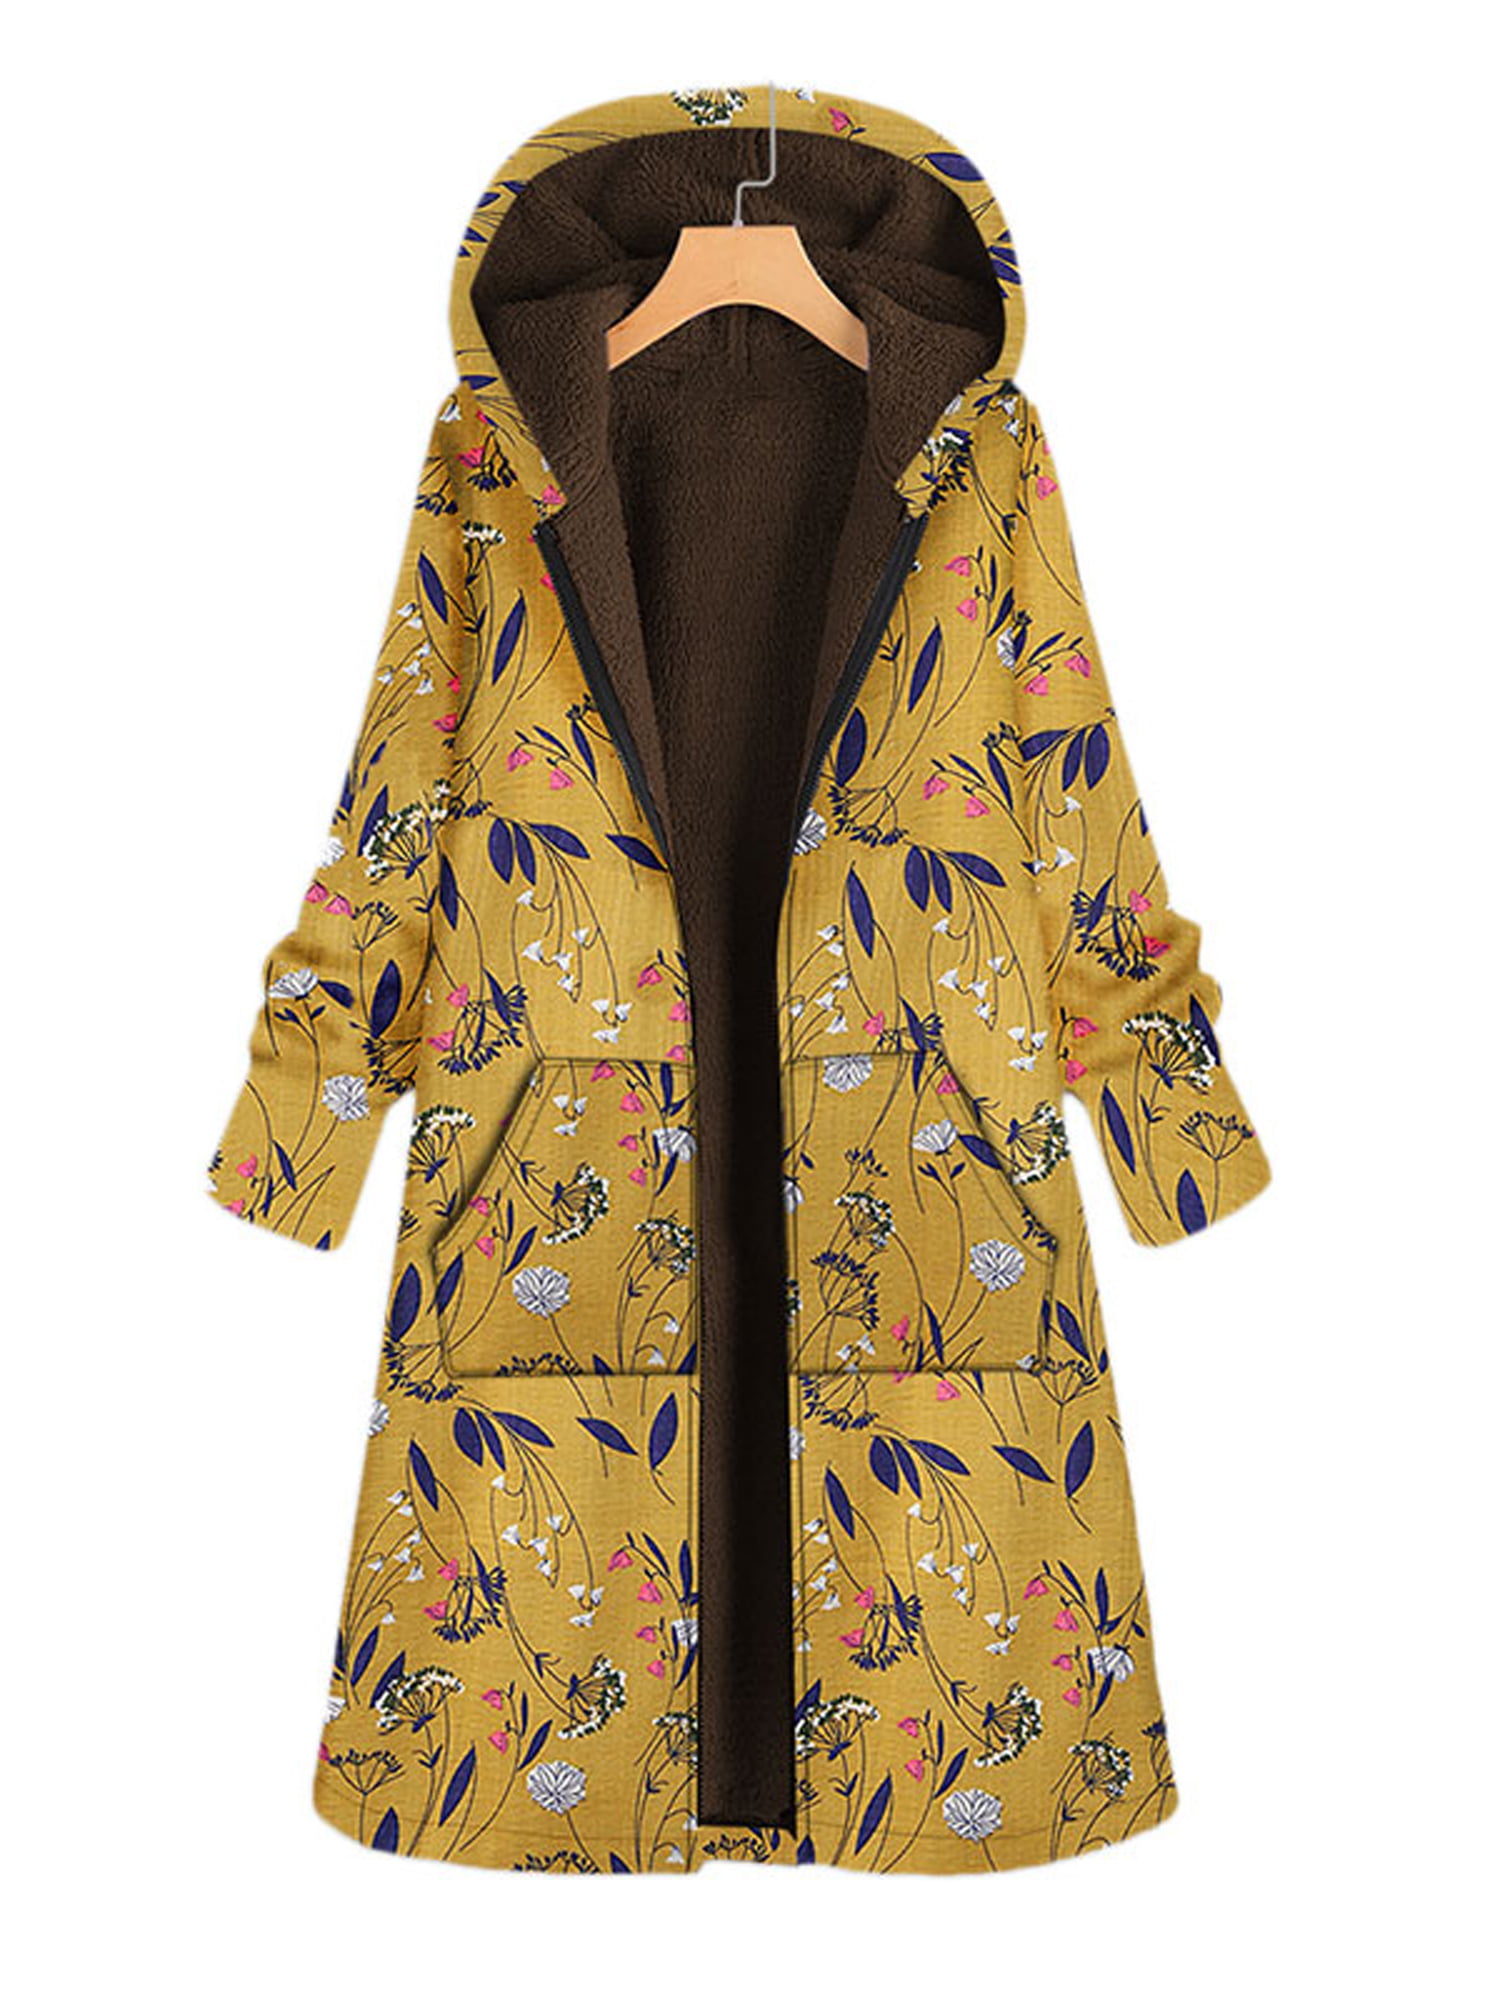 KCatsy Women Coat Parka Long Jacket Plus Size Hooded Ethnic Floral Plain Furry Lined Vintage Oversize Outerwear 